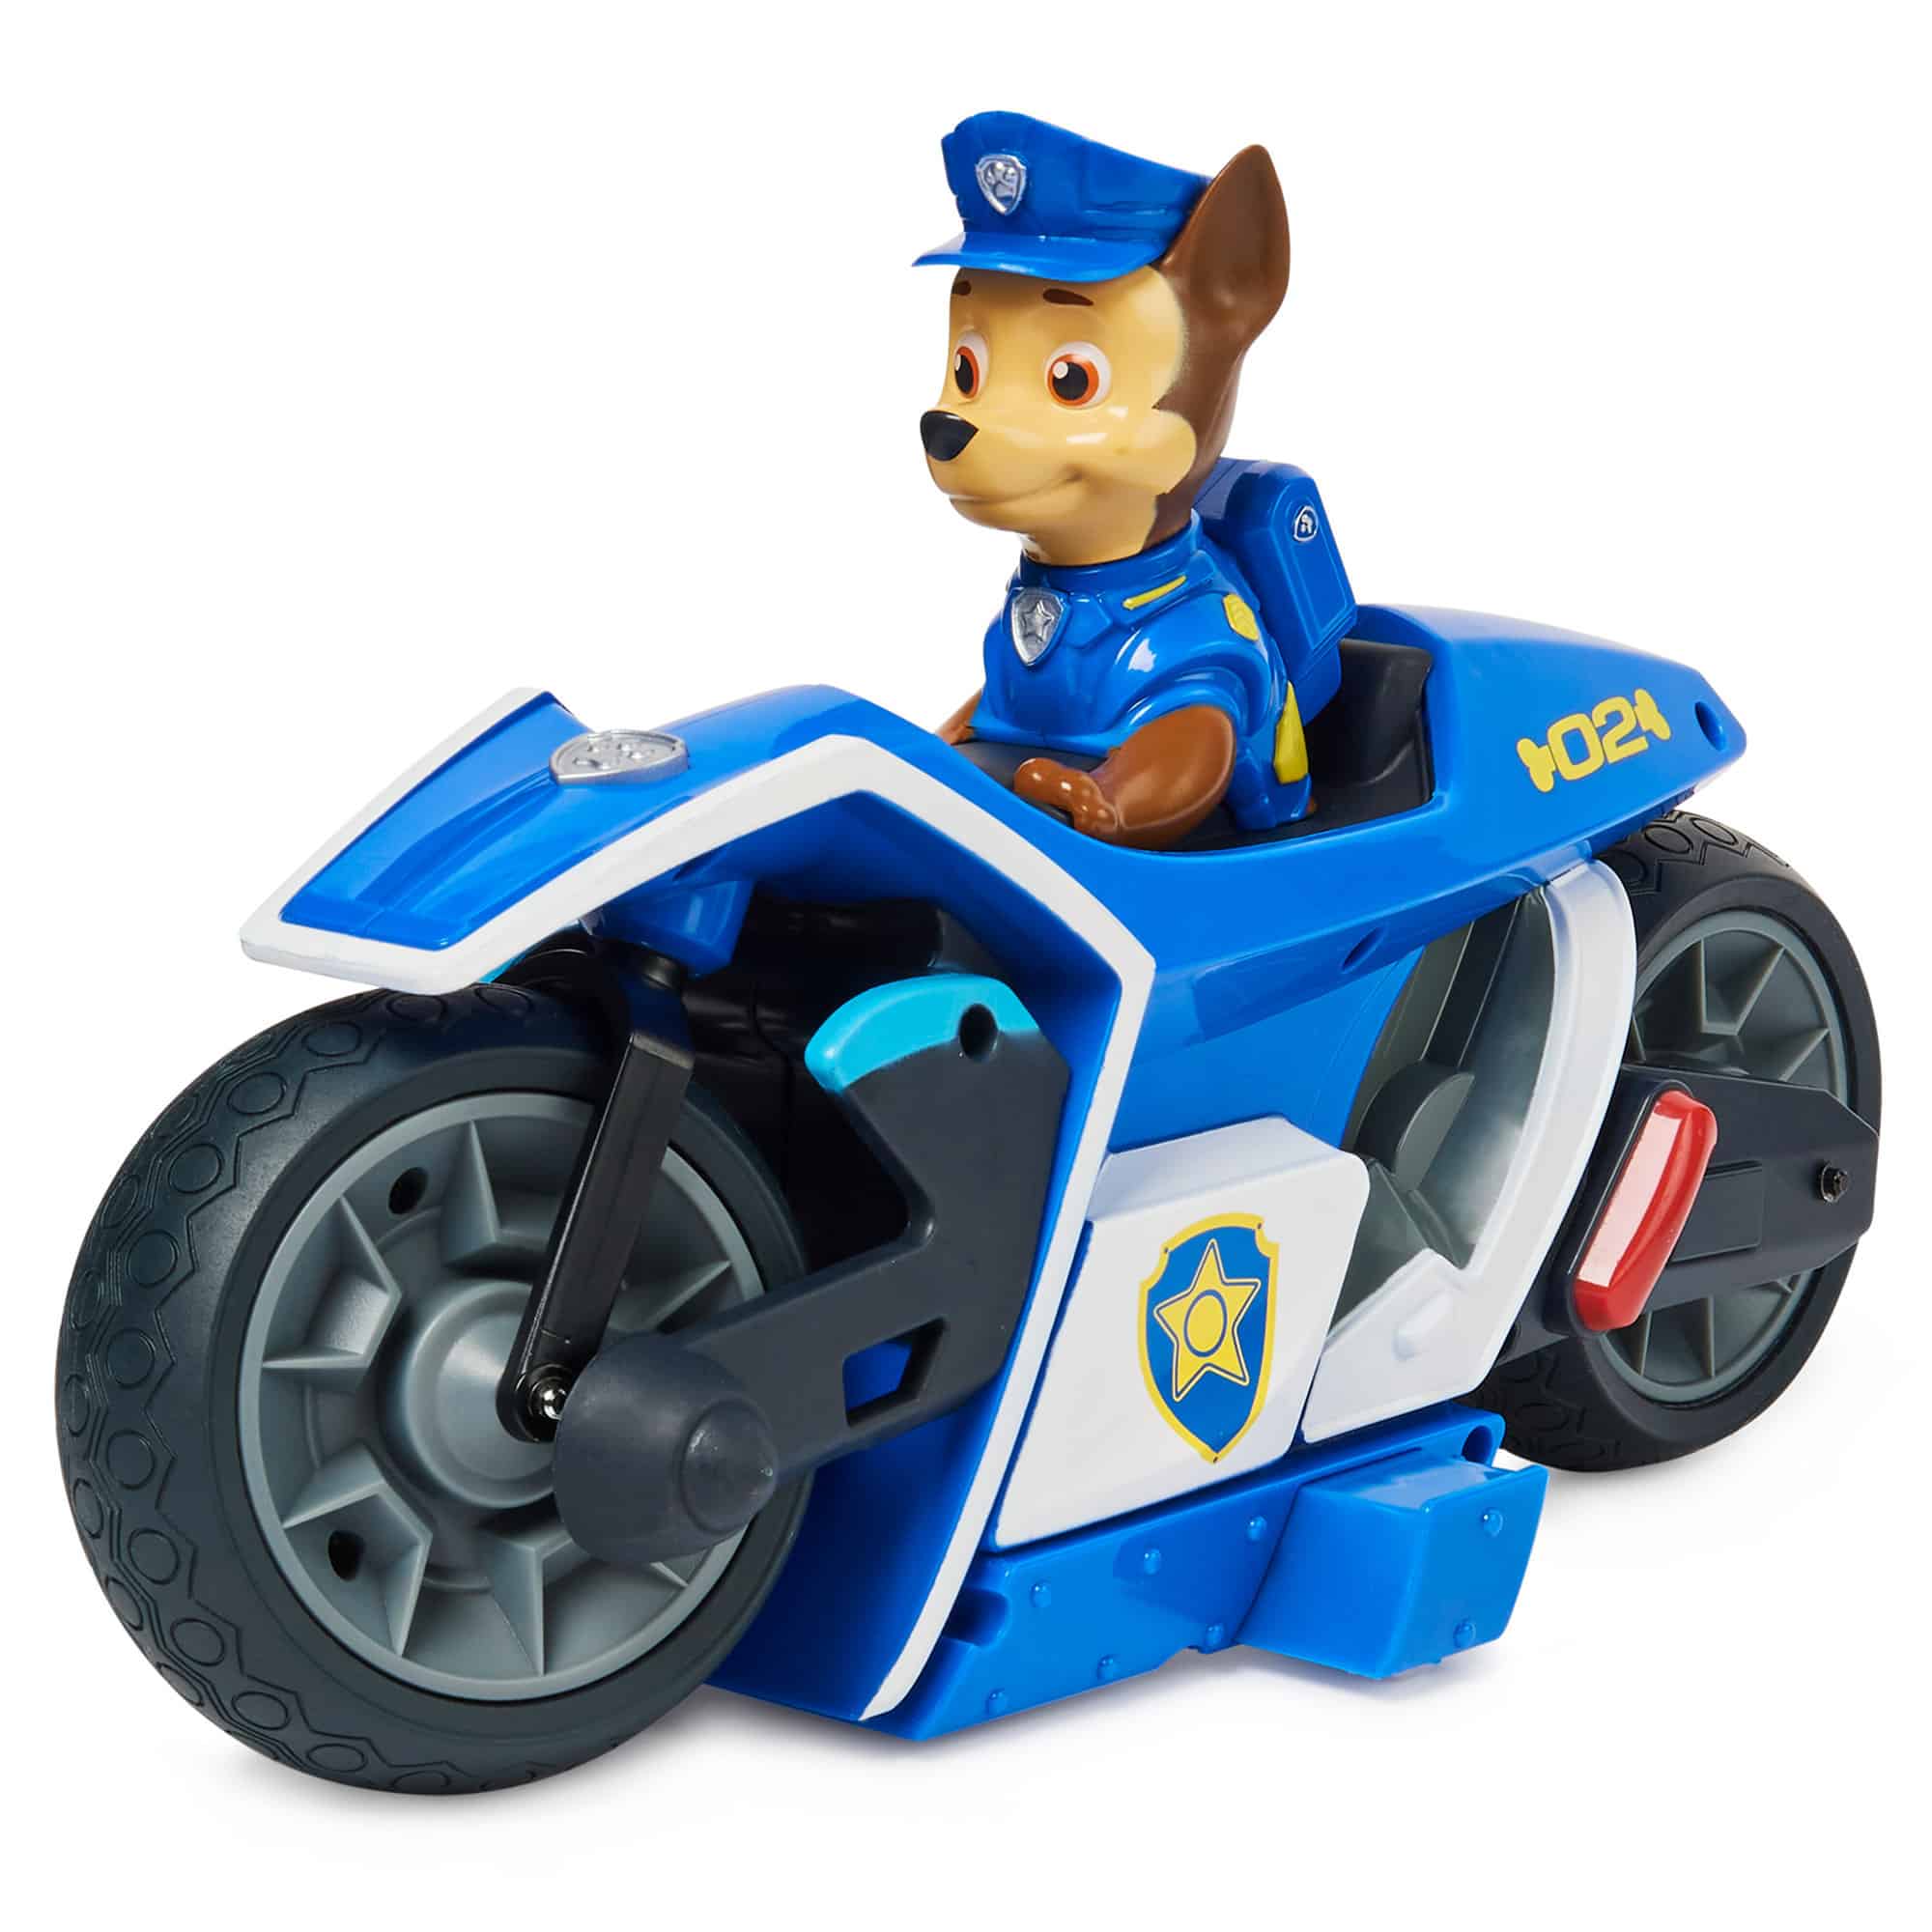 Nickelodeon - Paw Patrol - Chase RC Motorcycle